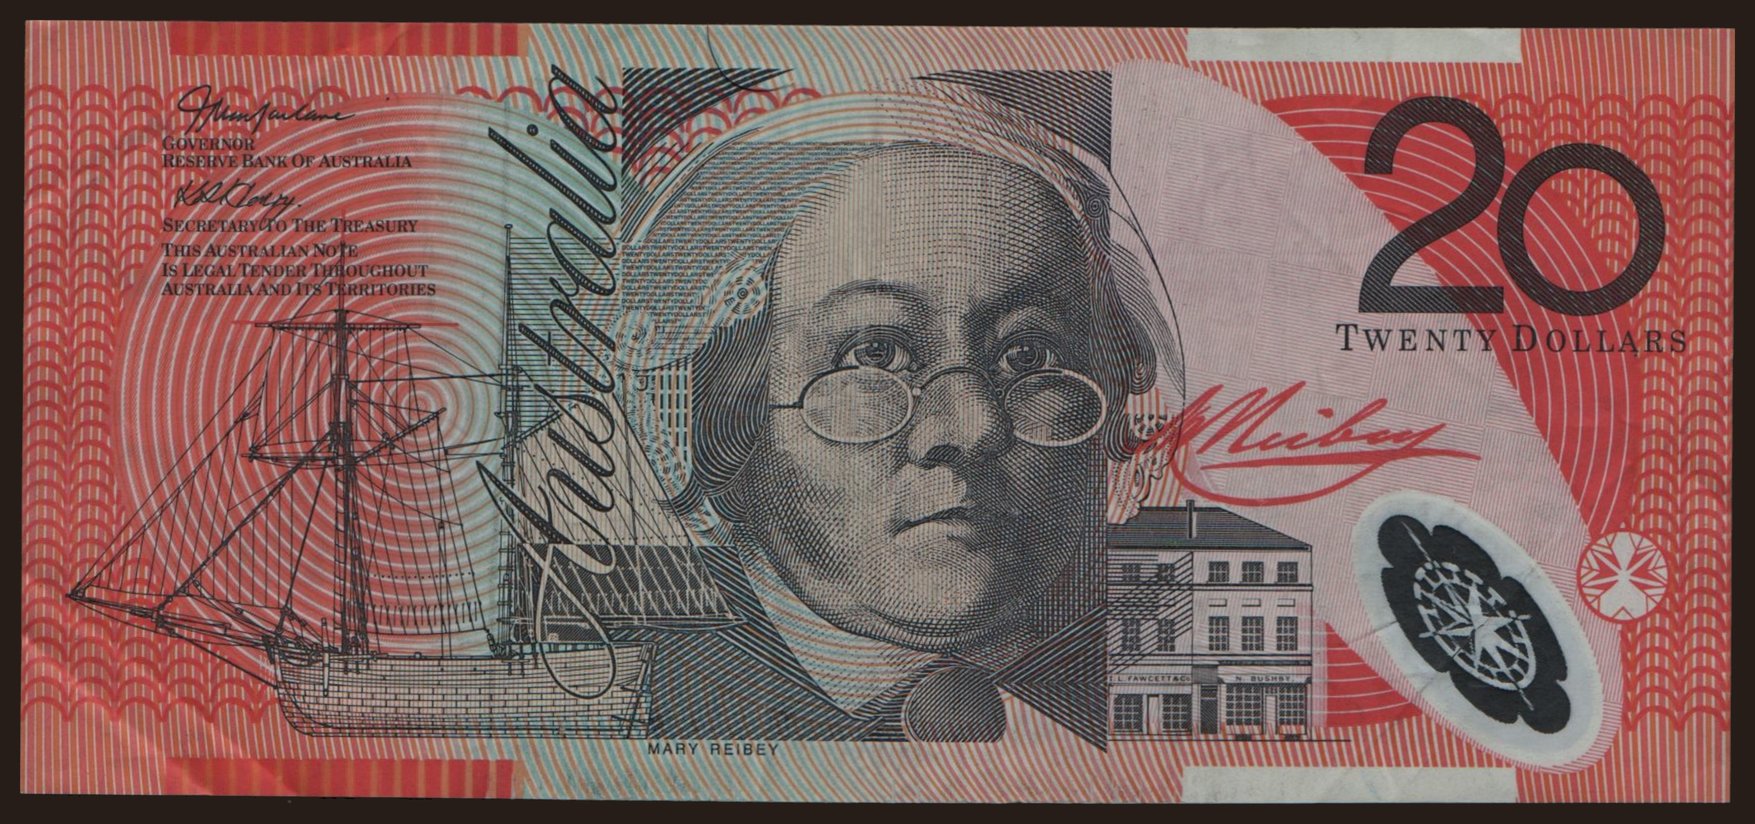 20 dollars, 2002